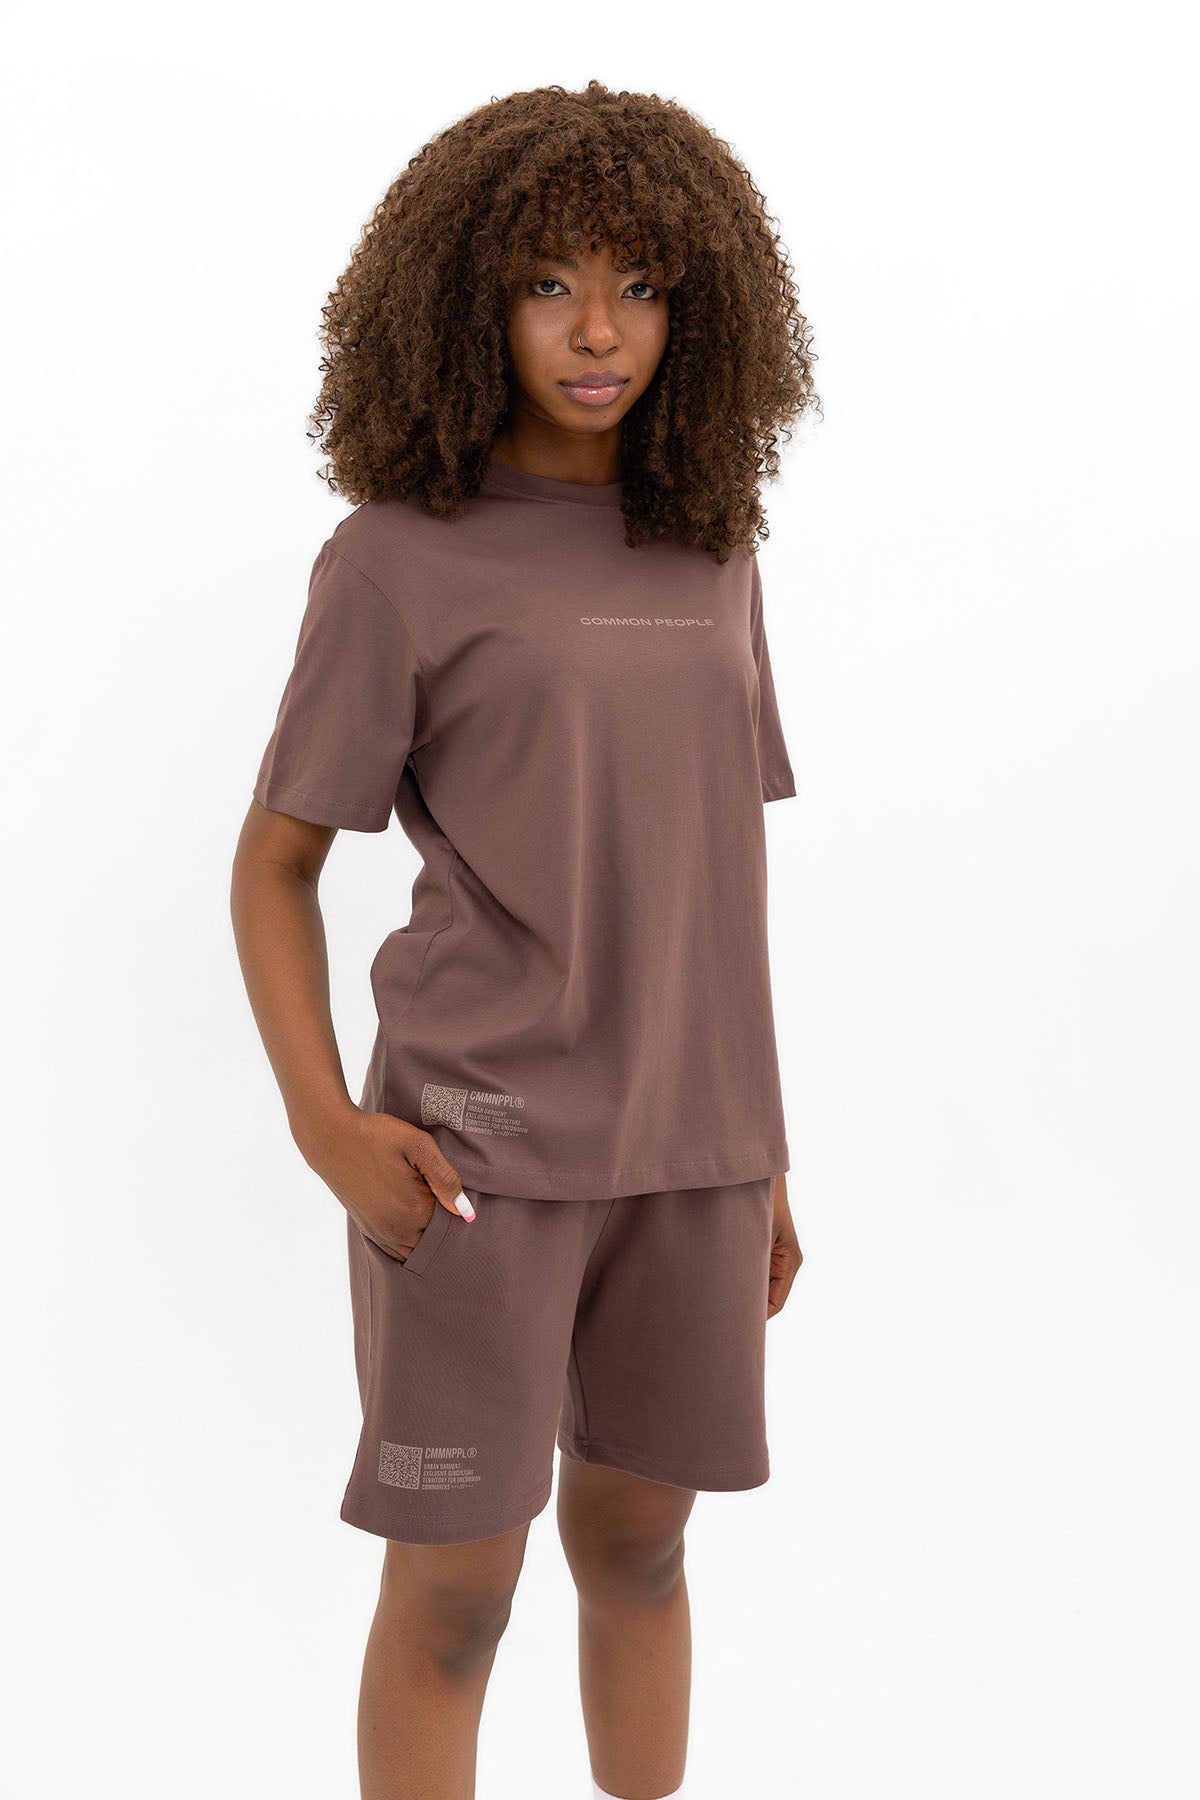 Infinite Web - Sepia Brown - Oversized T-shirt